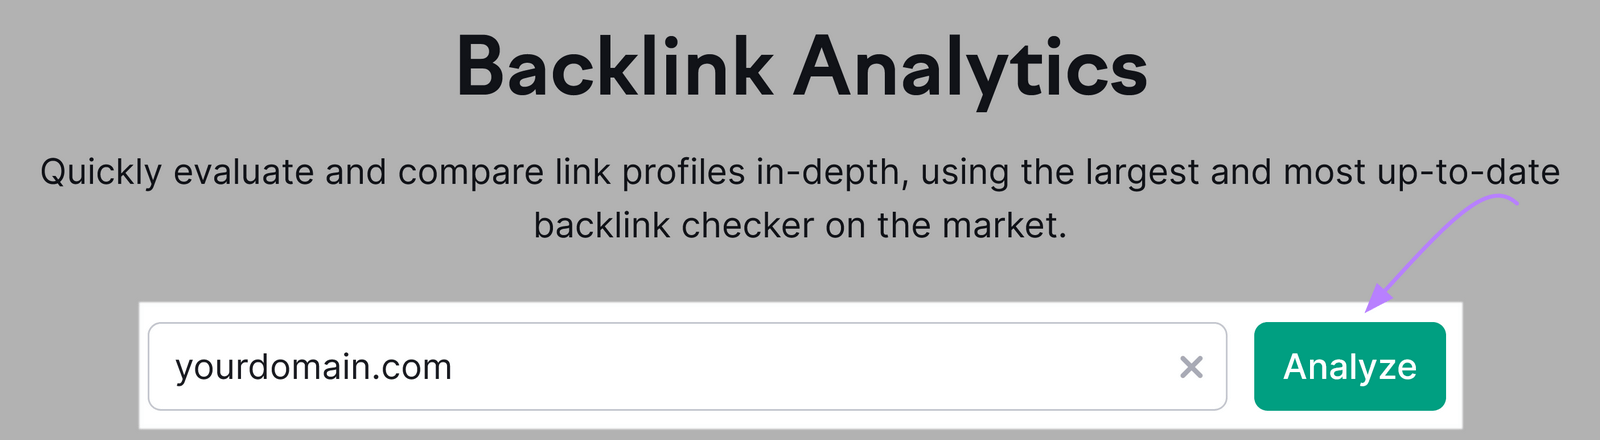 screenshot of Backlink Analytics instrumentality   with "yourdomain.com" successful  hunt  bar